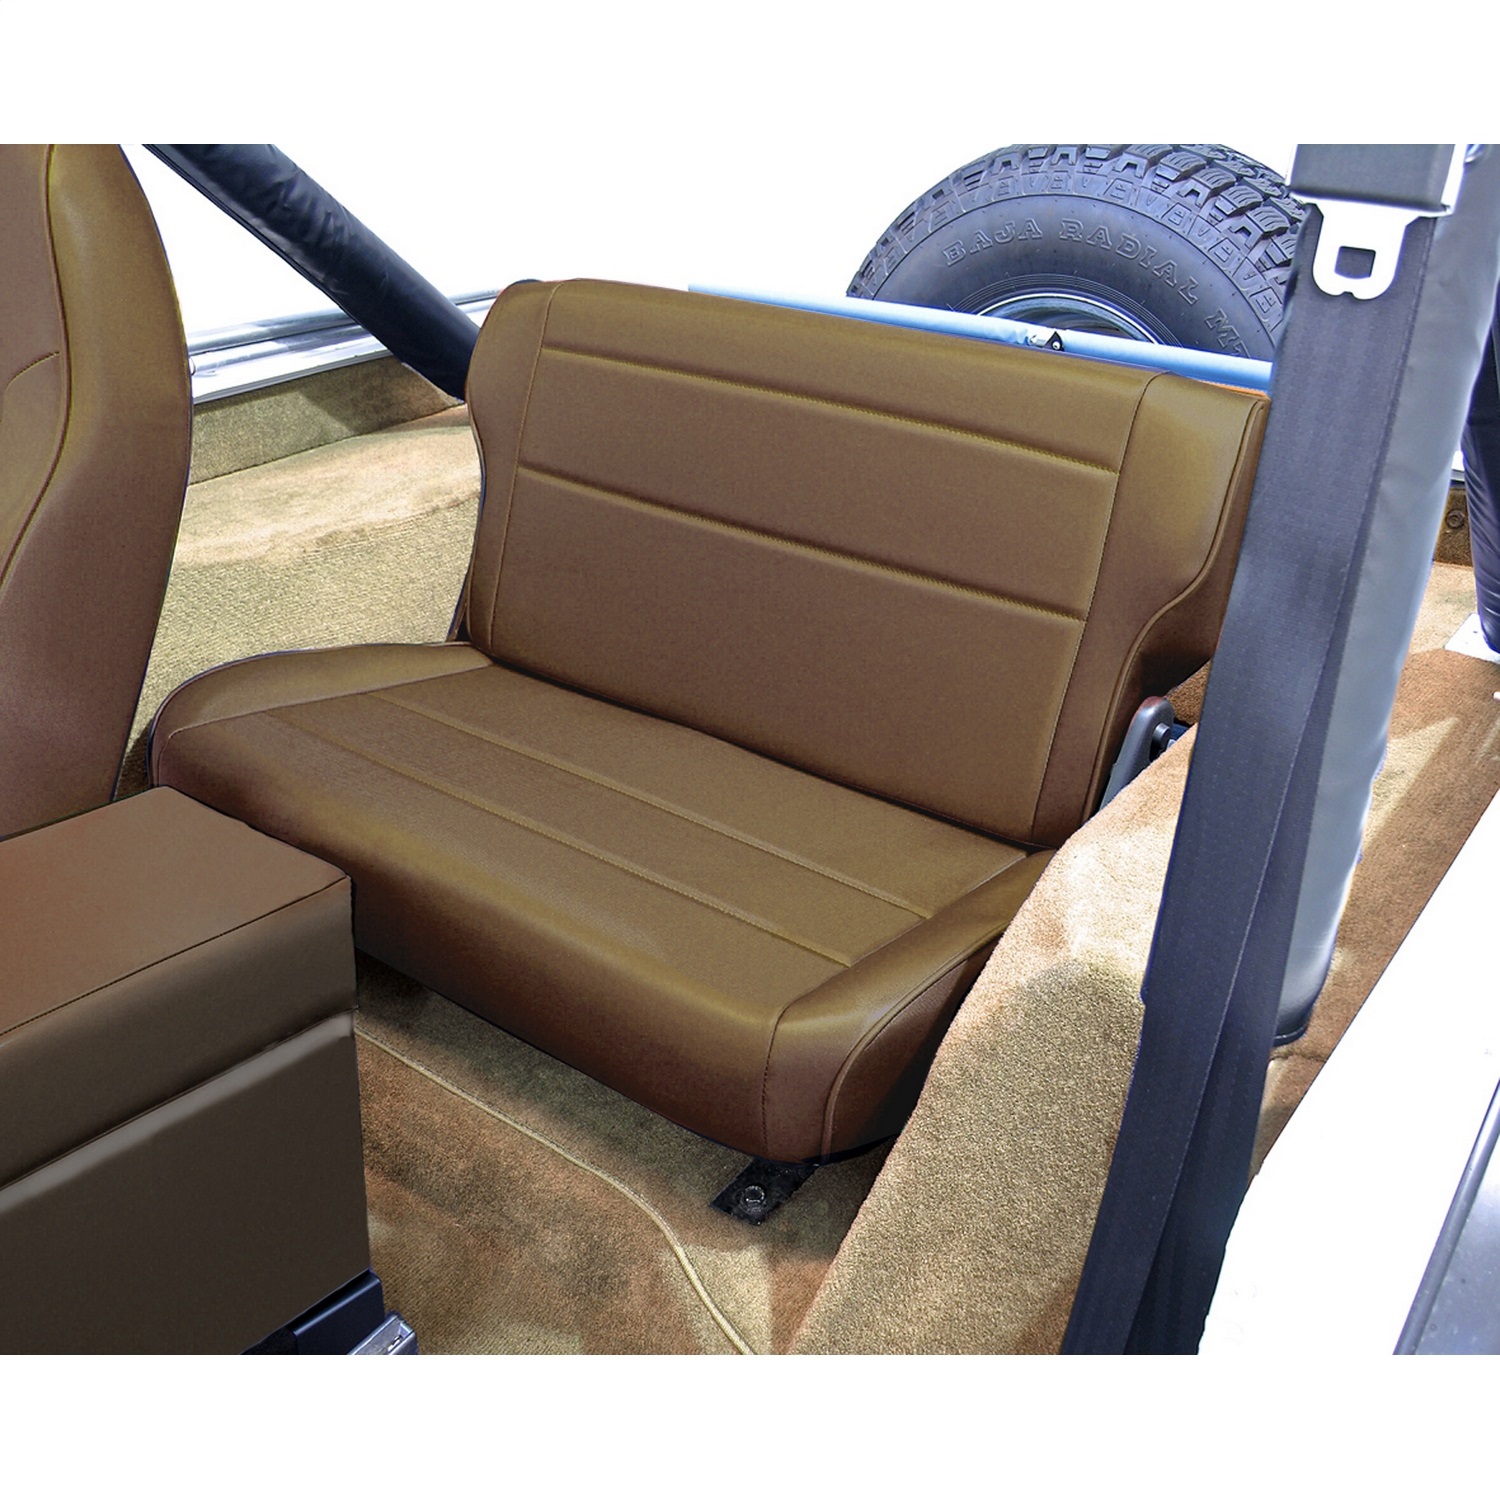 Rugged Ridge 13462.07 Fold And Tumble Rear Seat Fits 86-95 CJ7 Wrangler (YJ)